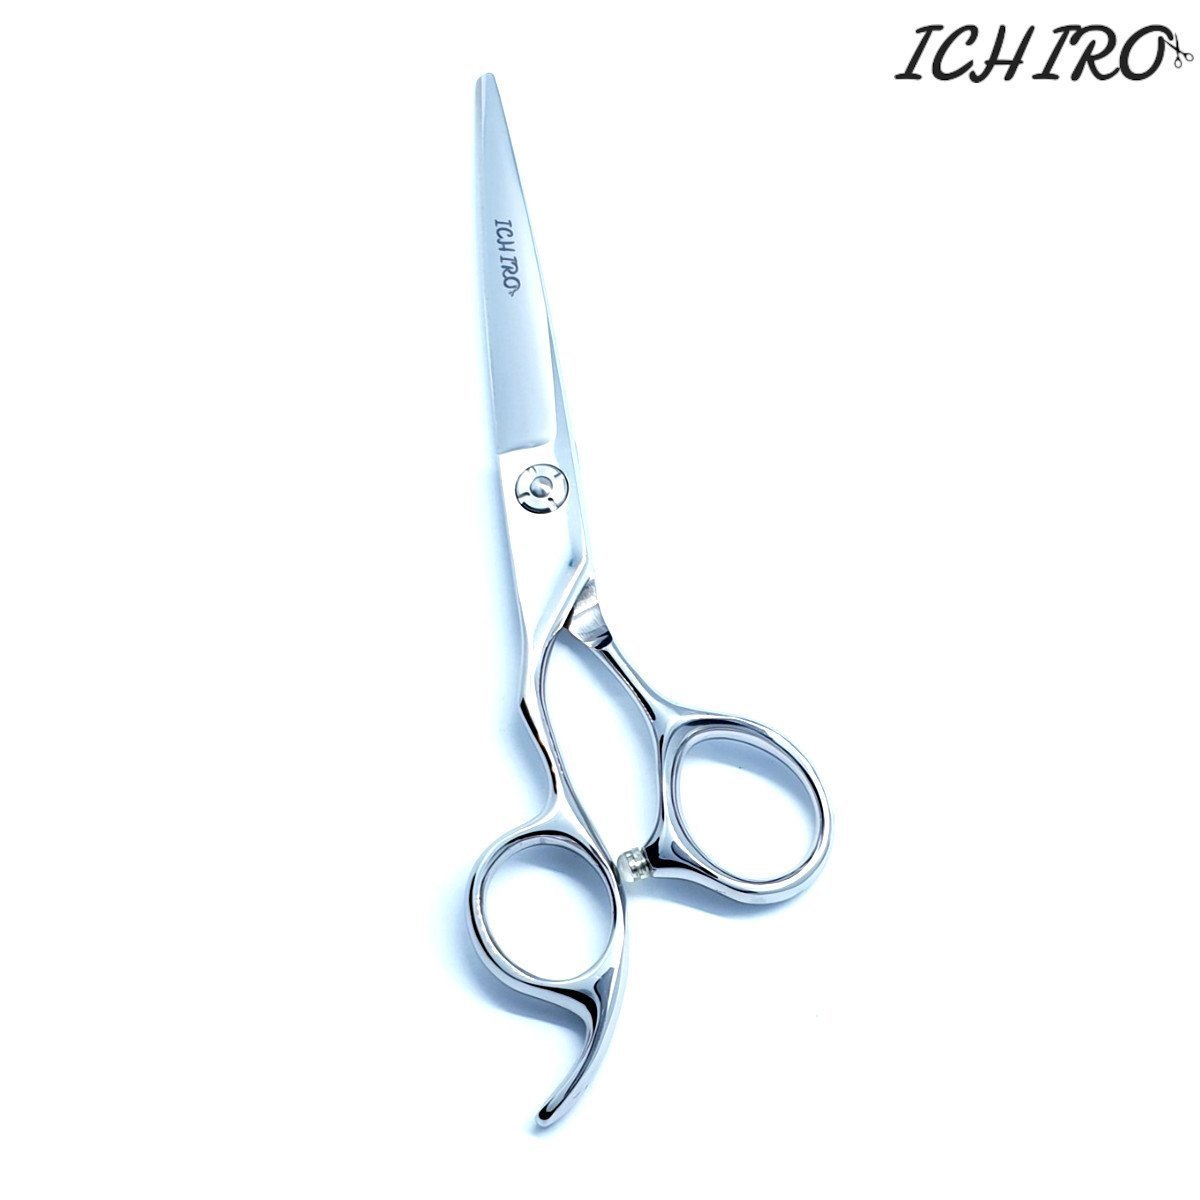 5 5 16cm Japan 440C Left Hand Scissors Customized Logo Black Professional  Human Hair Scissors Barber S Hairdressing Sal268p From Erfw897, $19.34